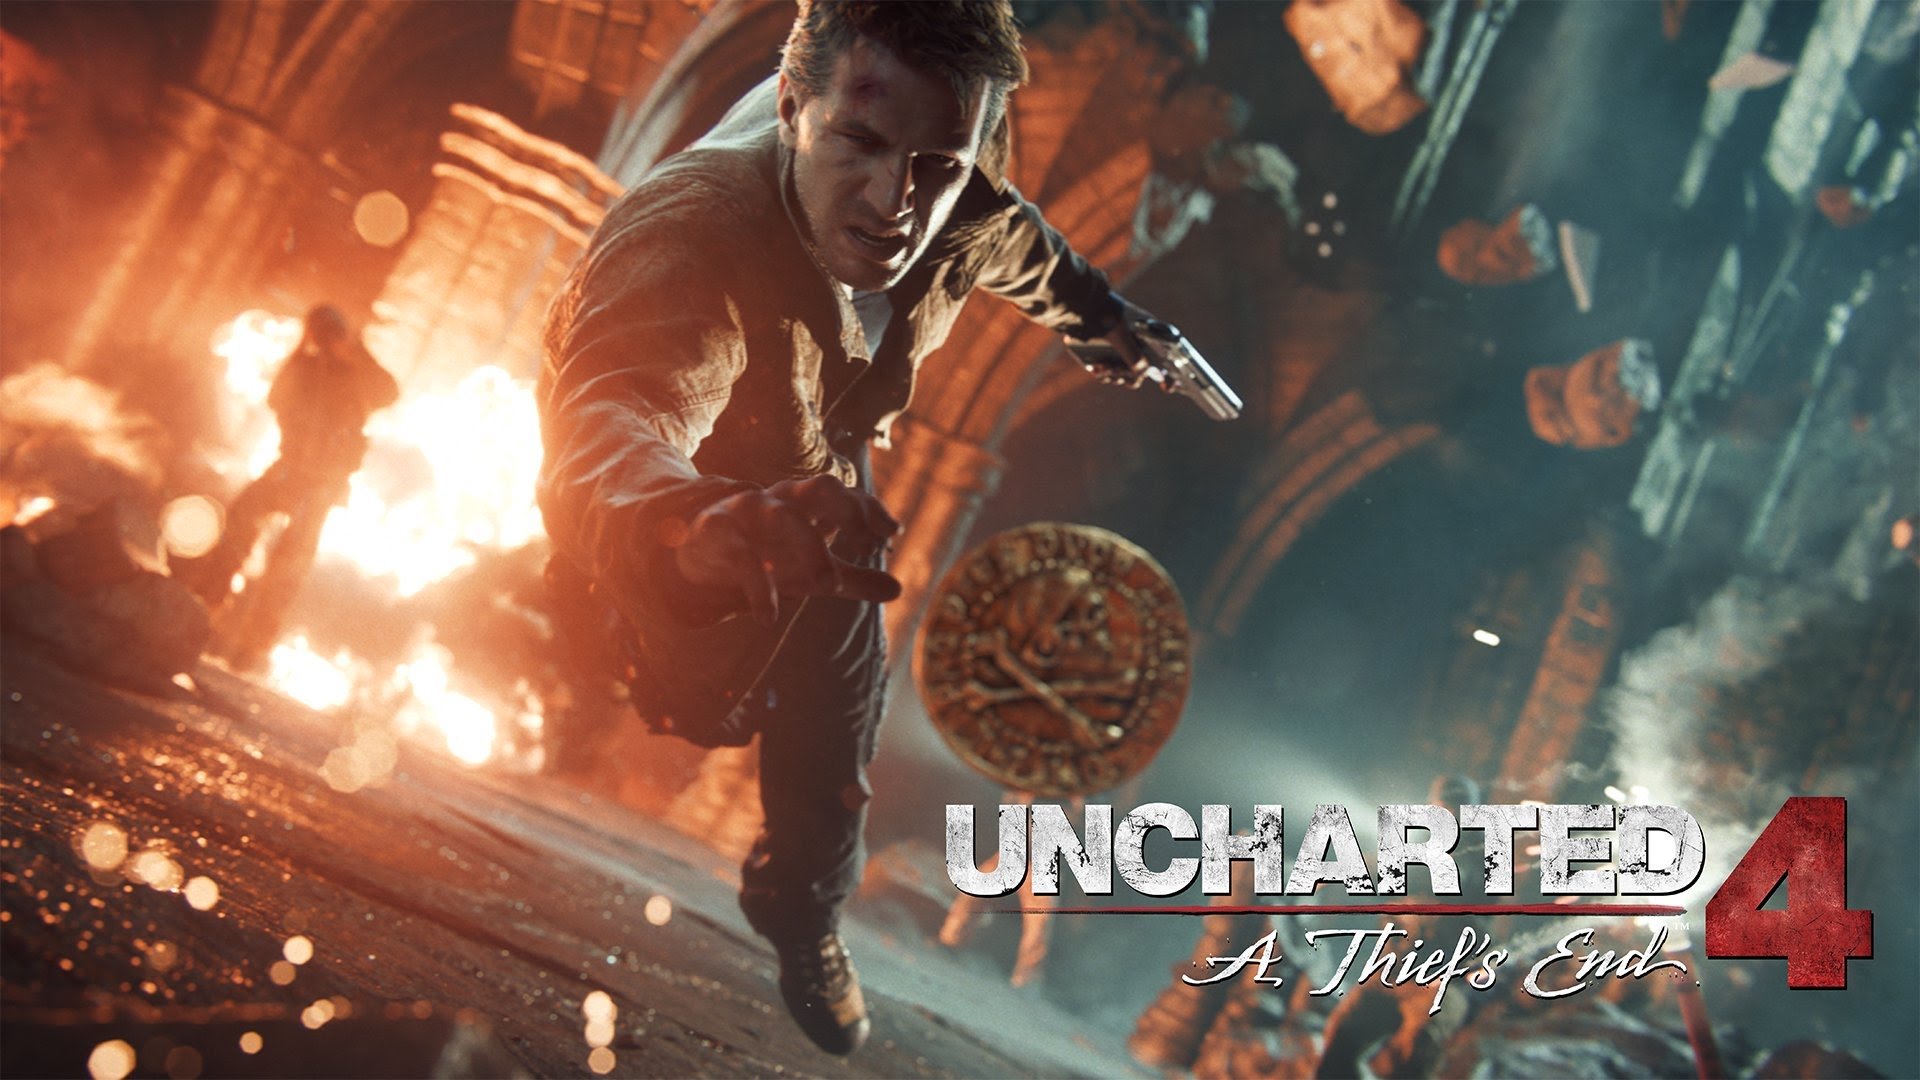 Confira dois novos vídeos de Uncharted 3! - NerdBunker